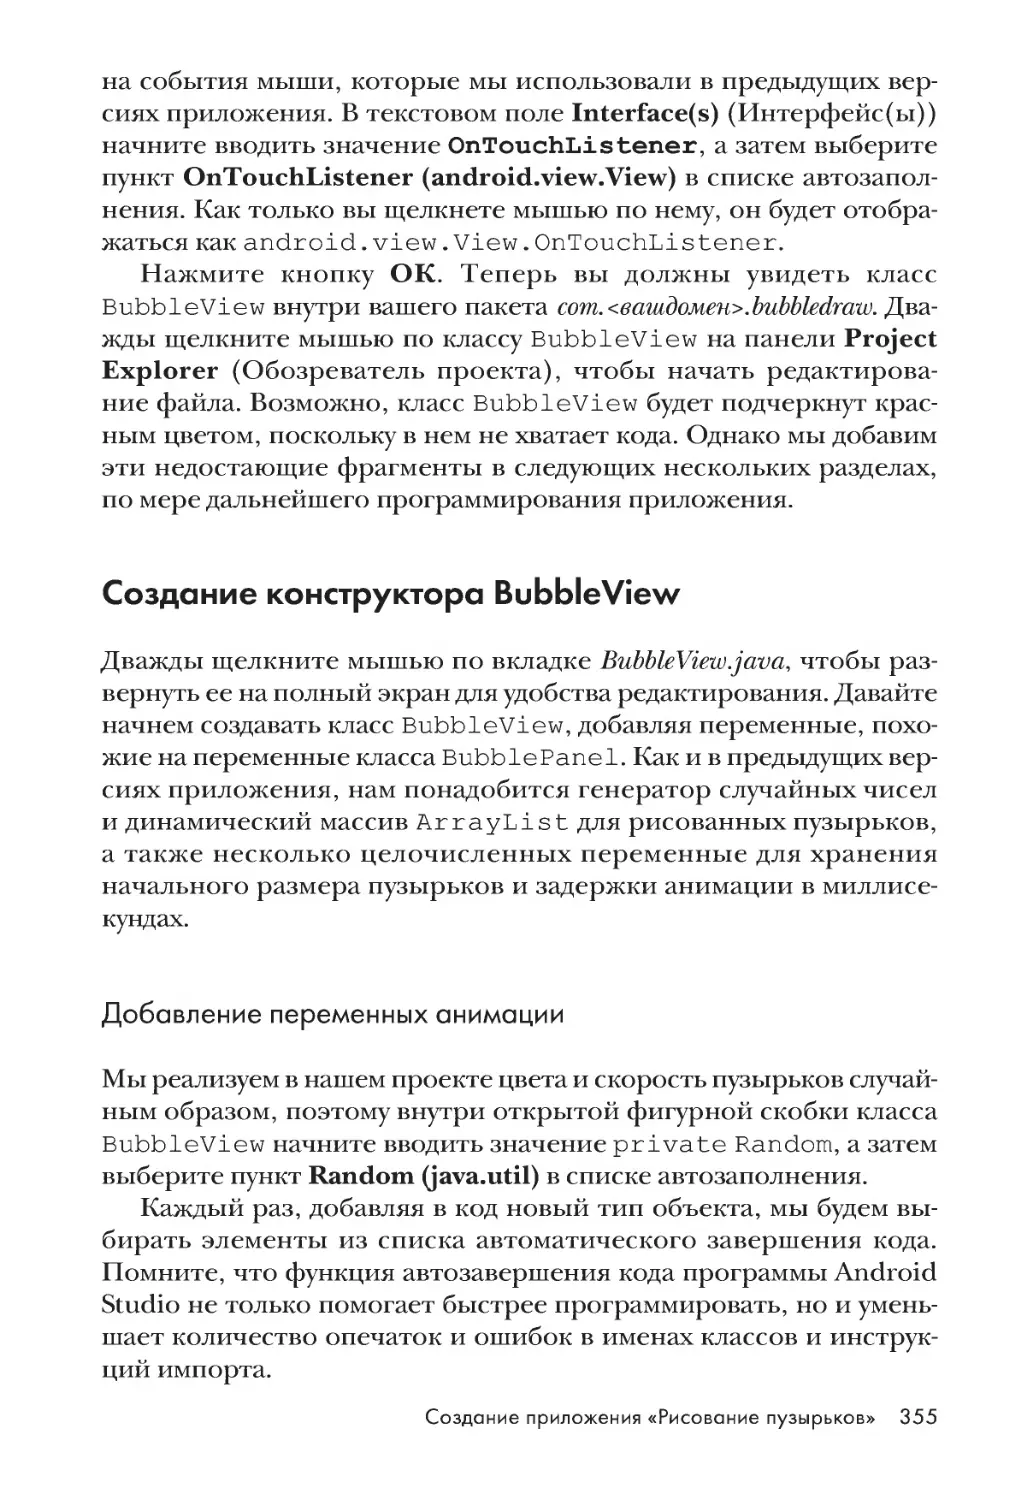 Создание конструктора BubbleView